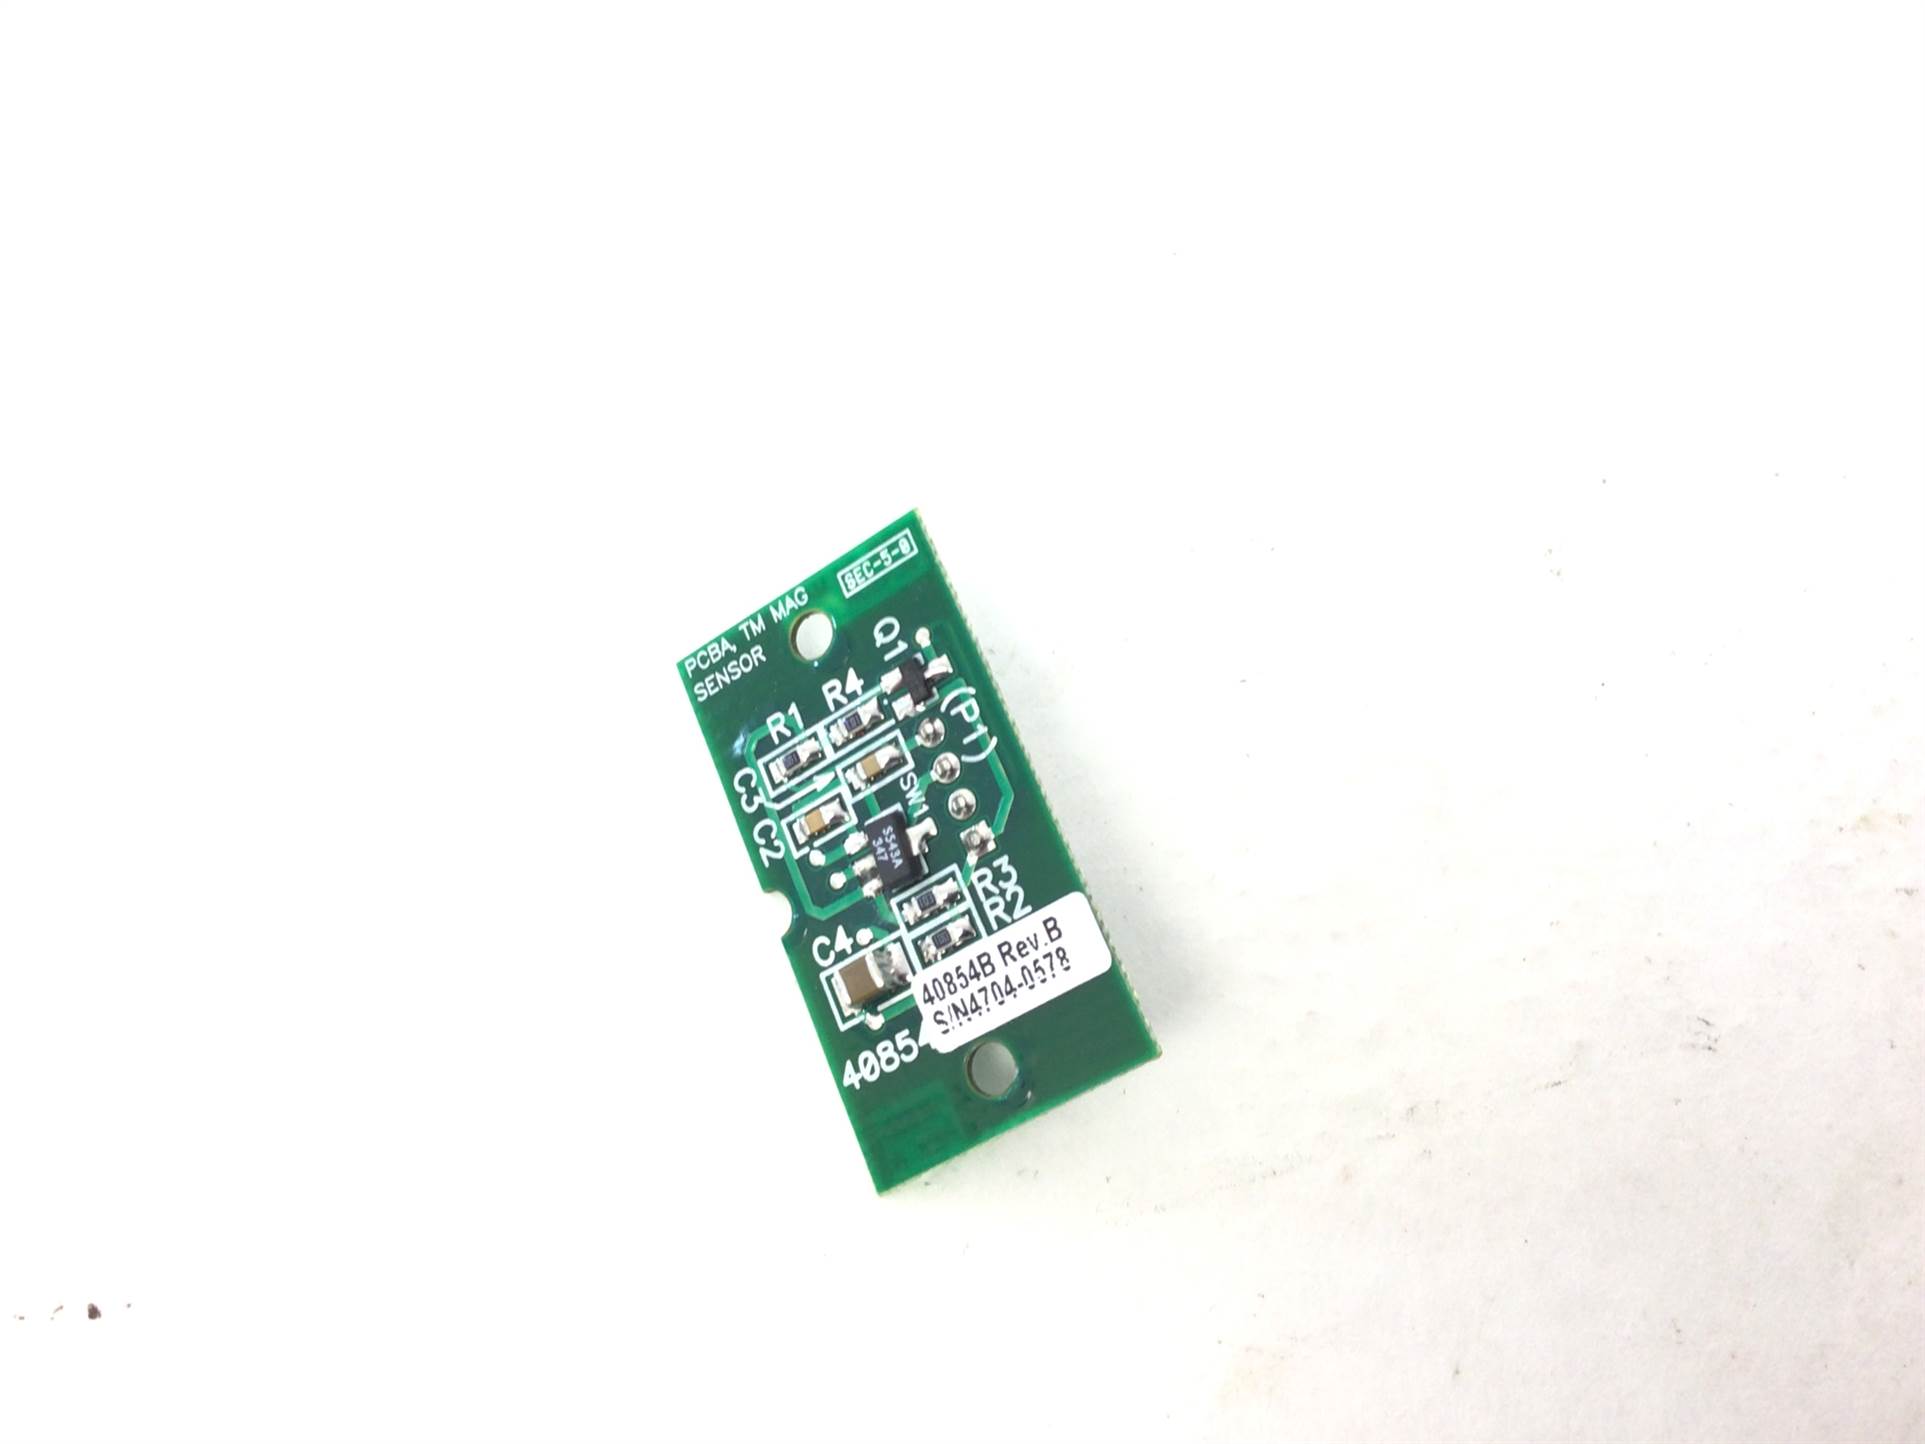 Sensor Chip (Used)